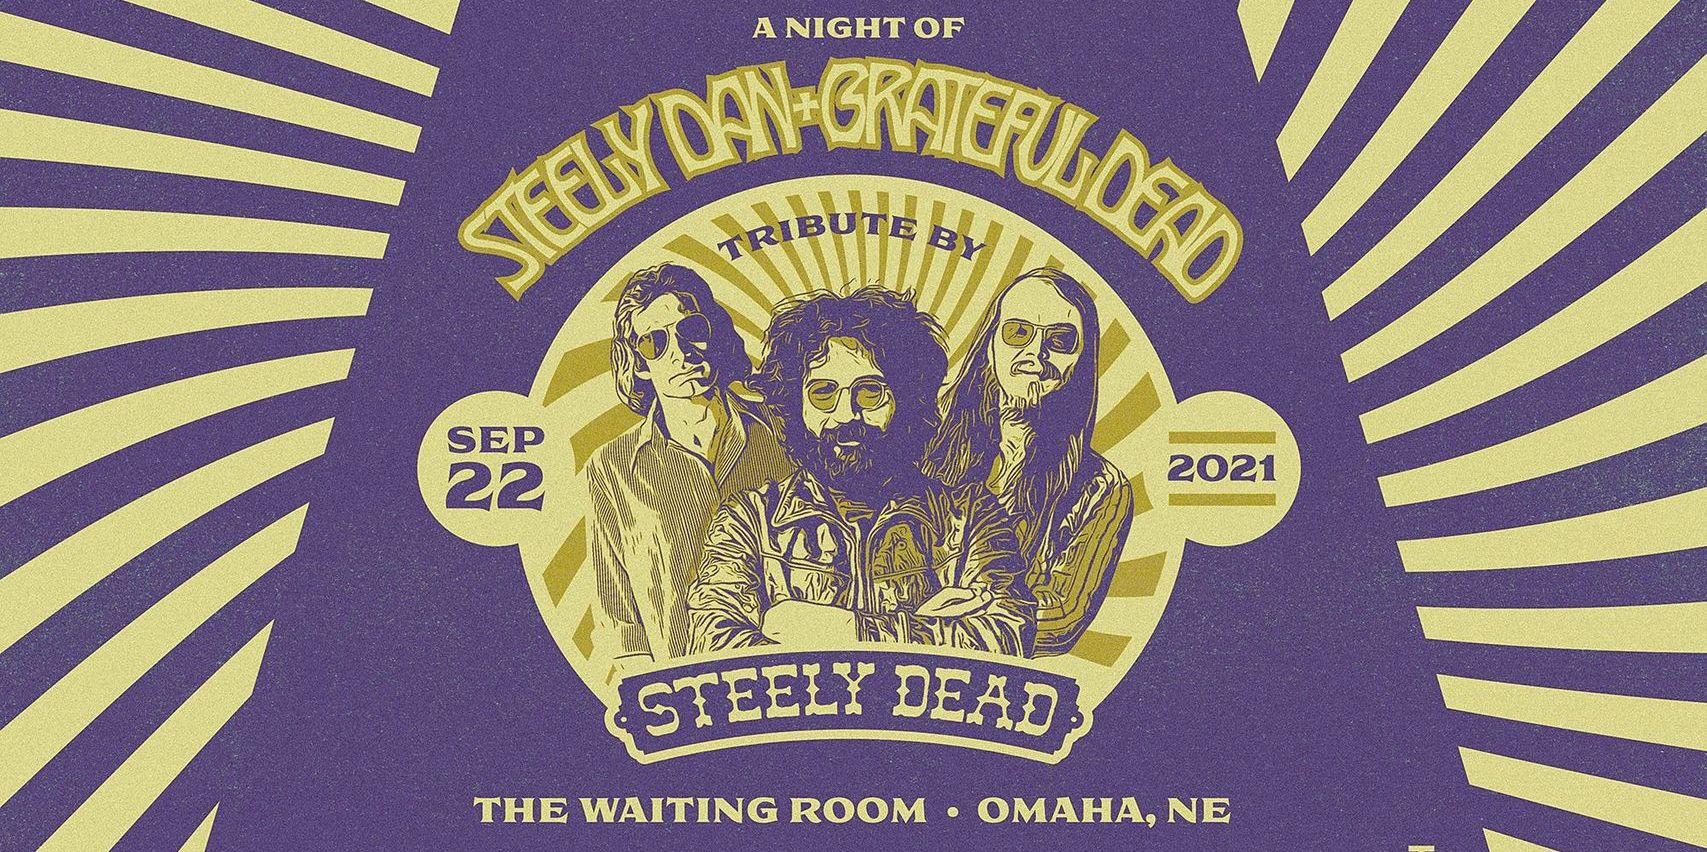 Steely Dan & Grateful Dead Night promotional image